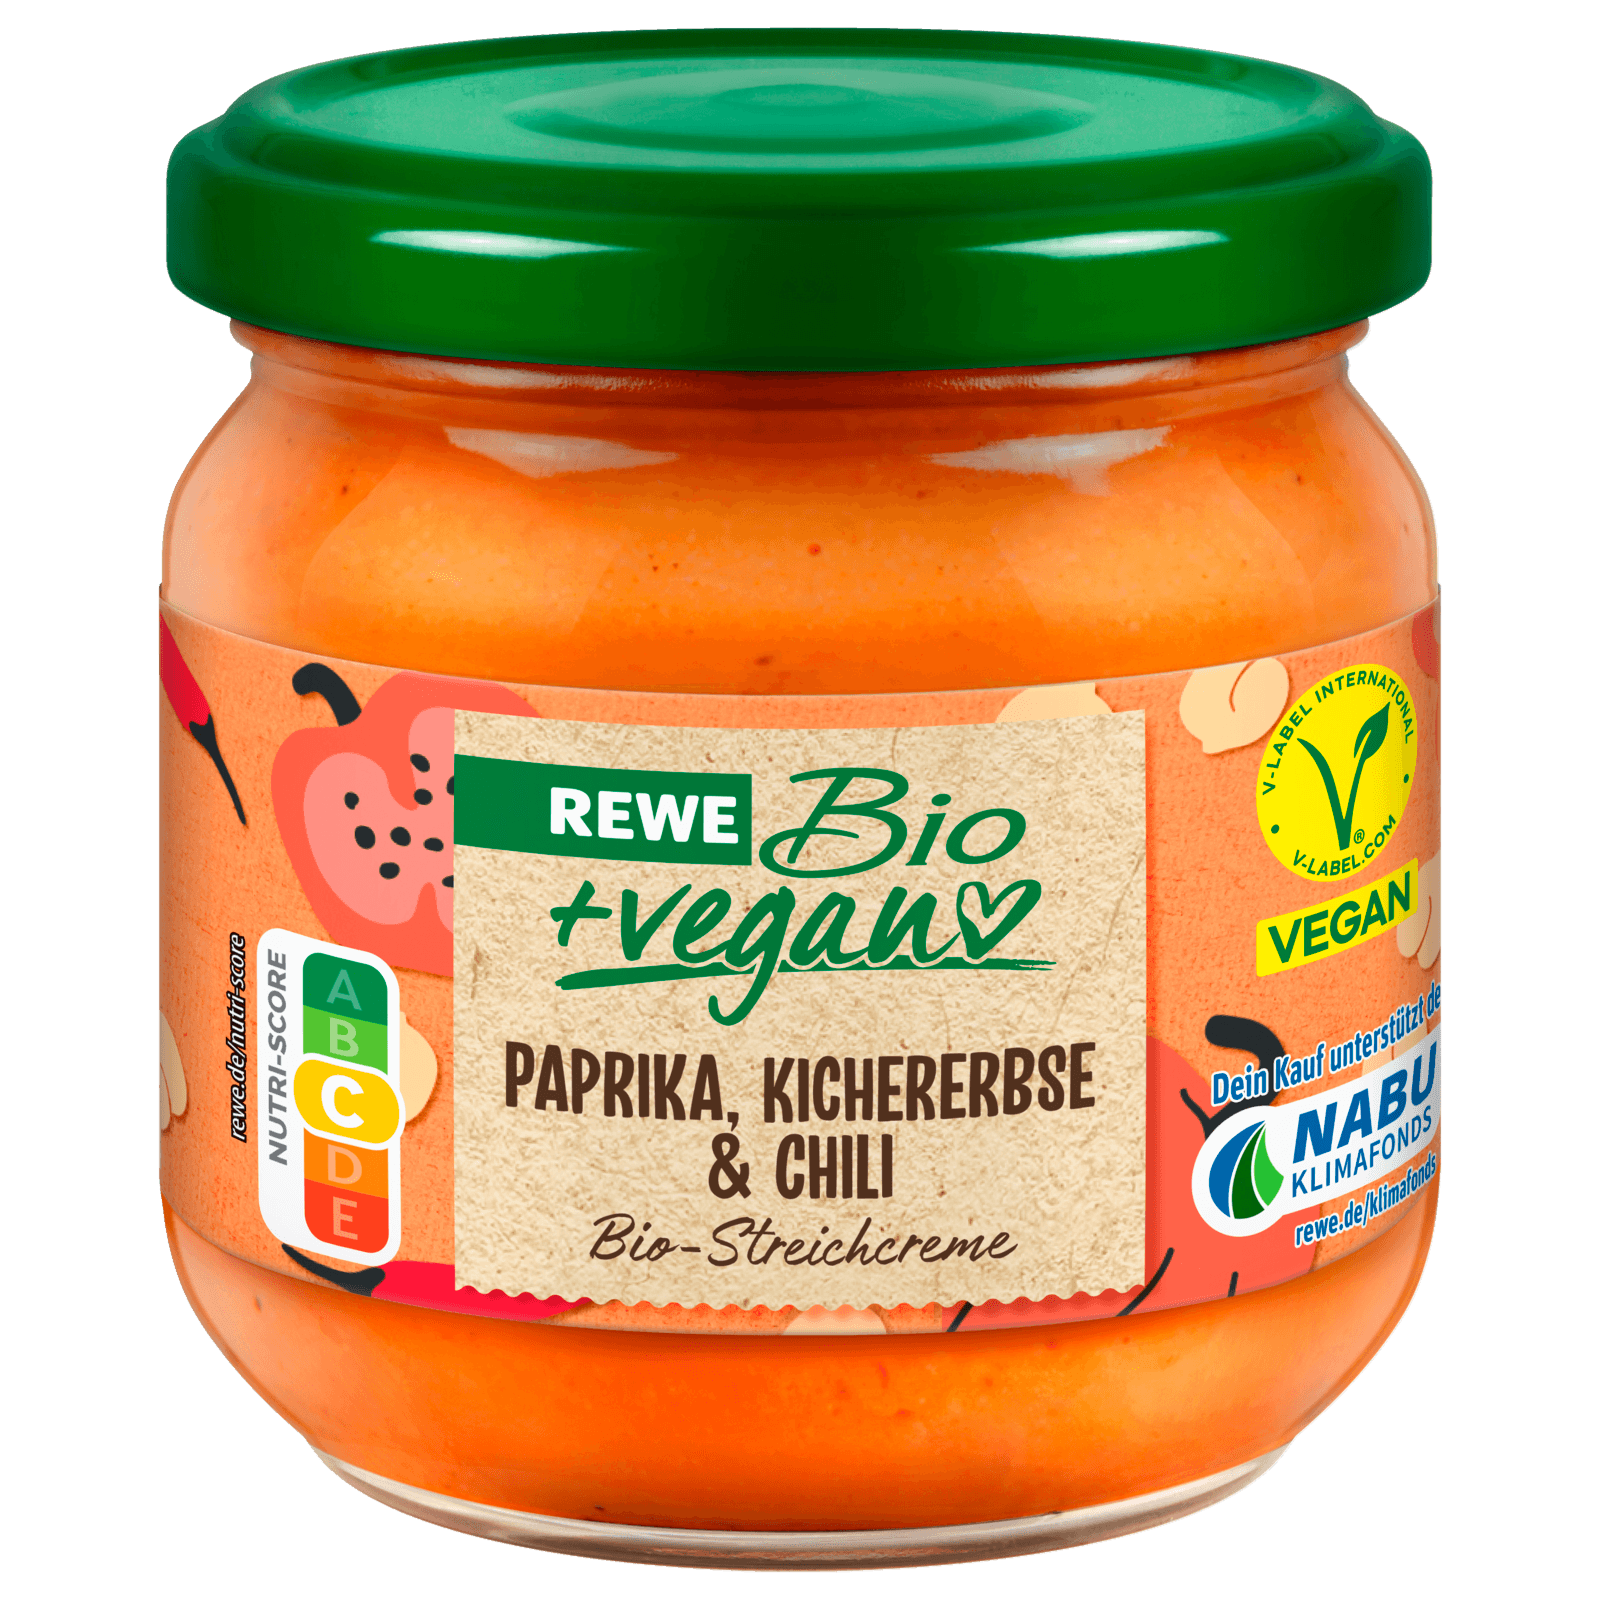 REWE Bio + vegan Streichcreme Paprika, Kichererbse & Chili 180g